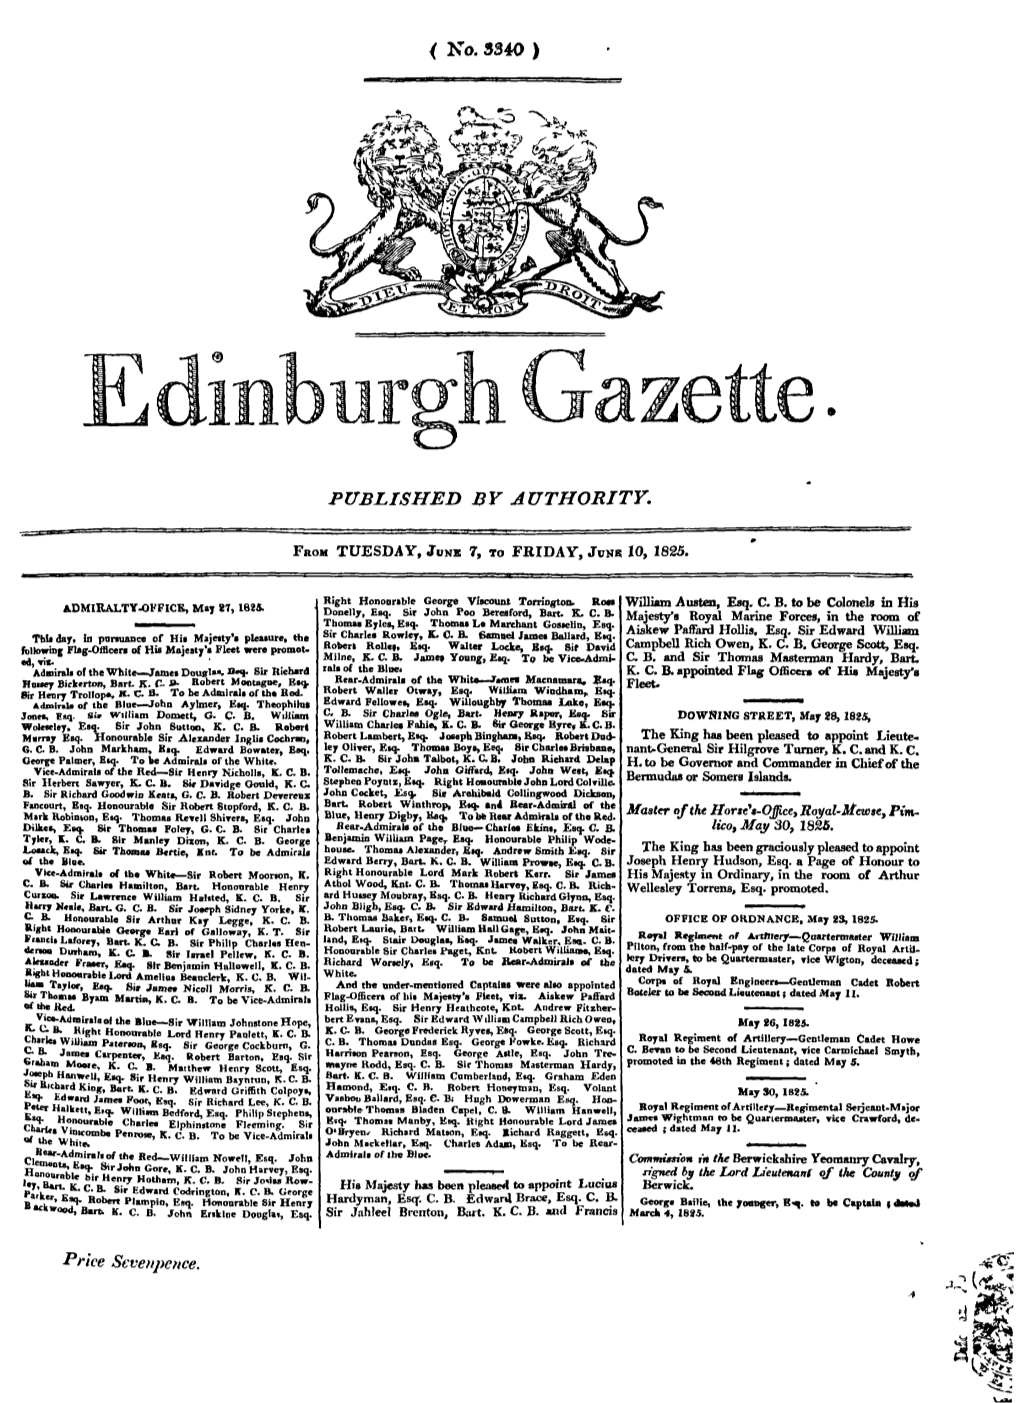 The Edinburgh Gazette, Issue 3340